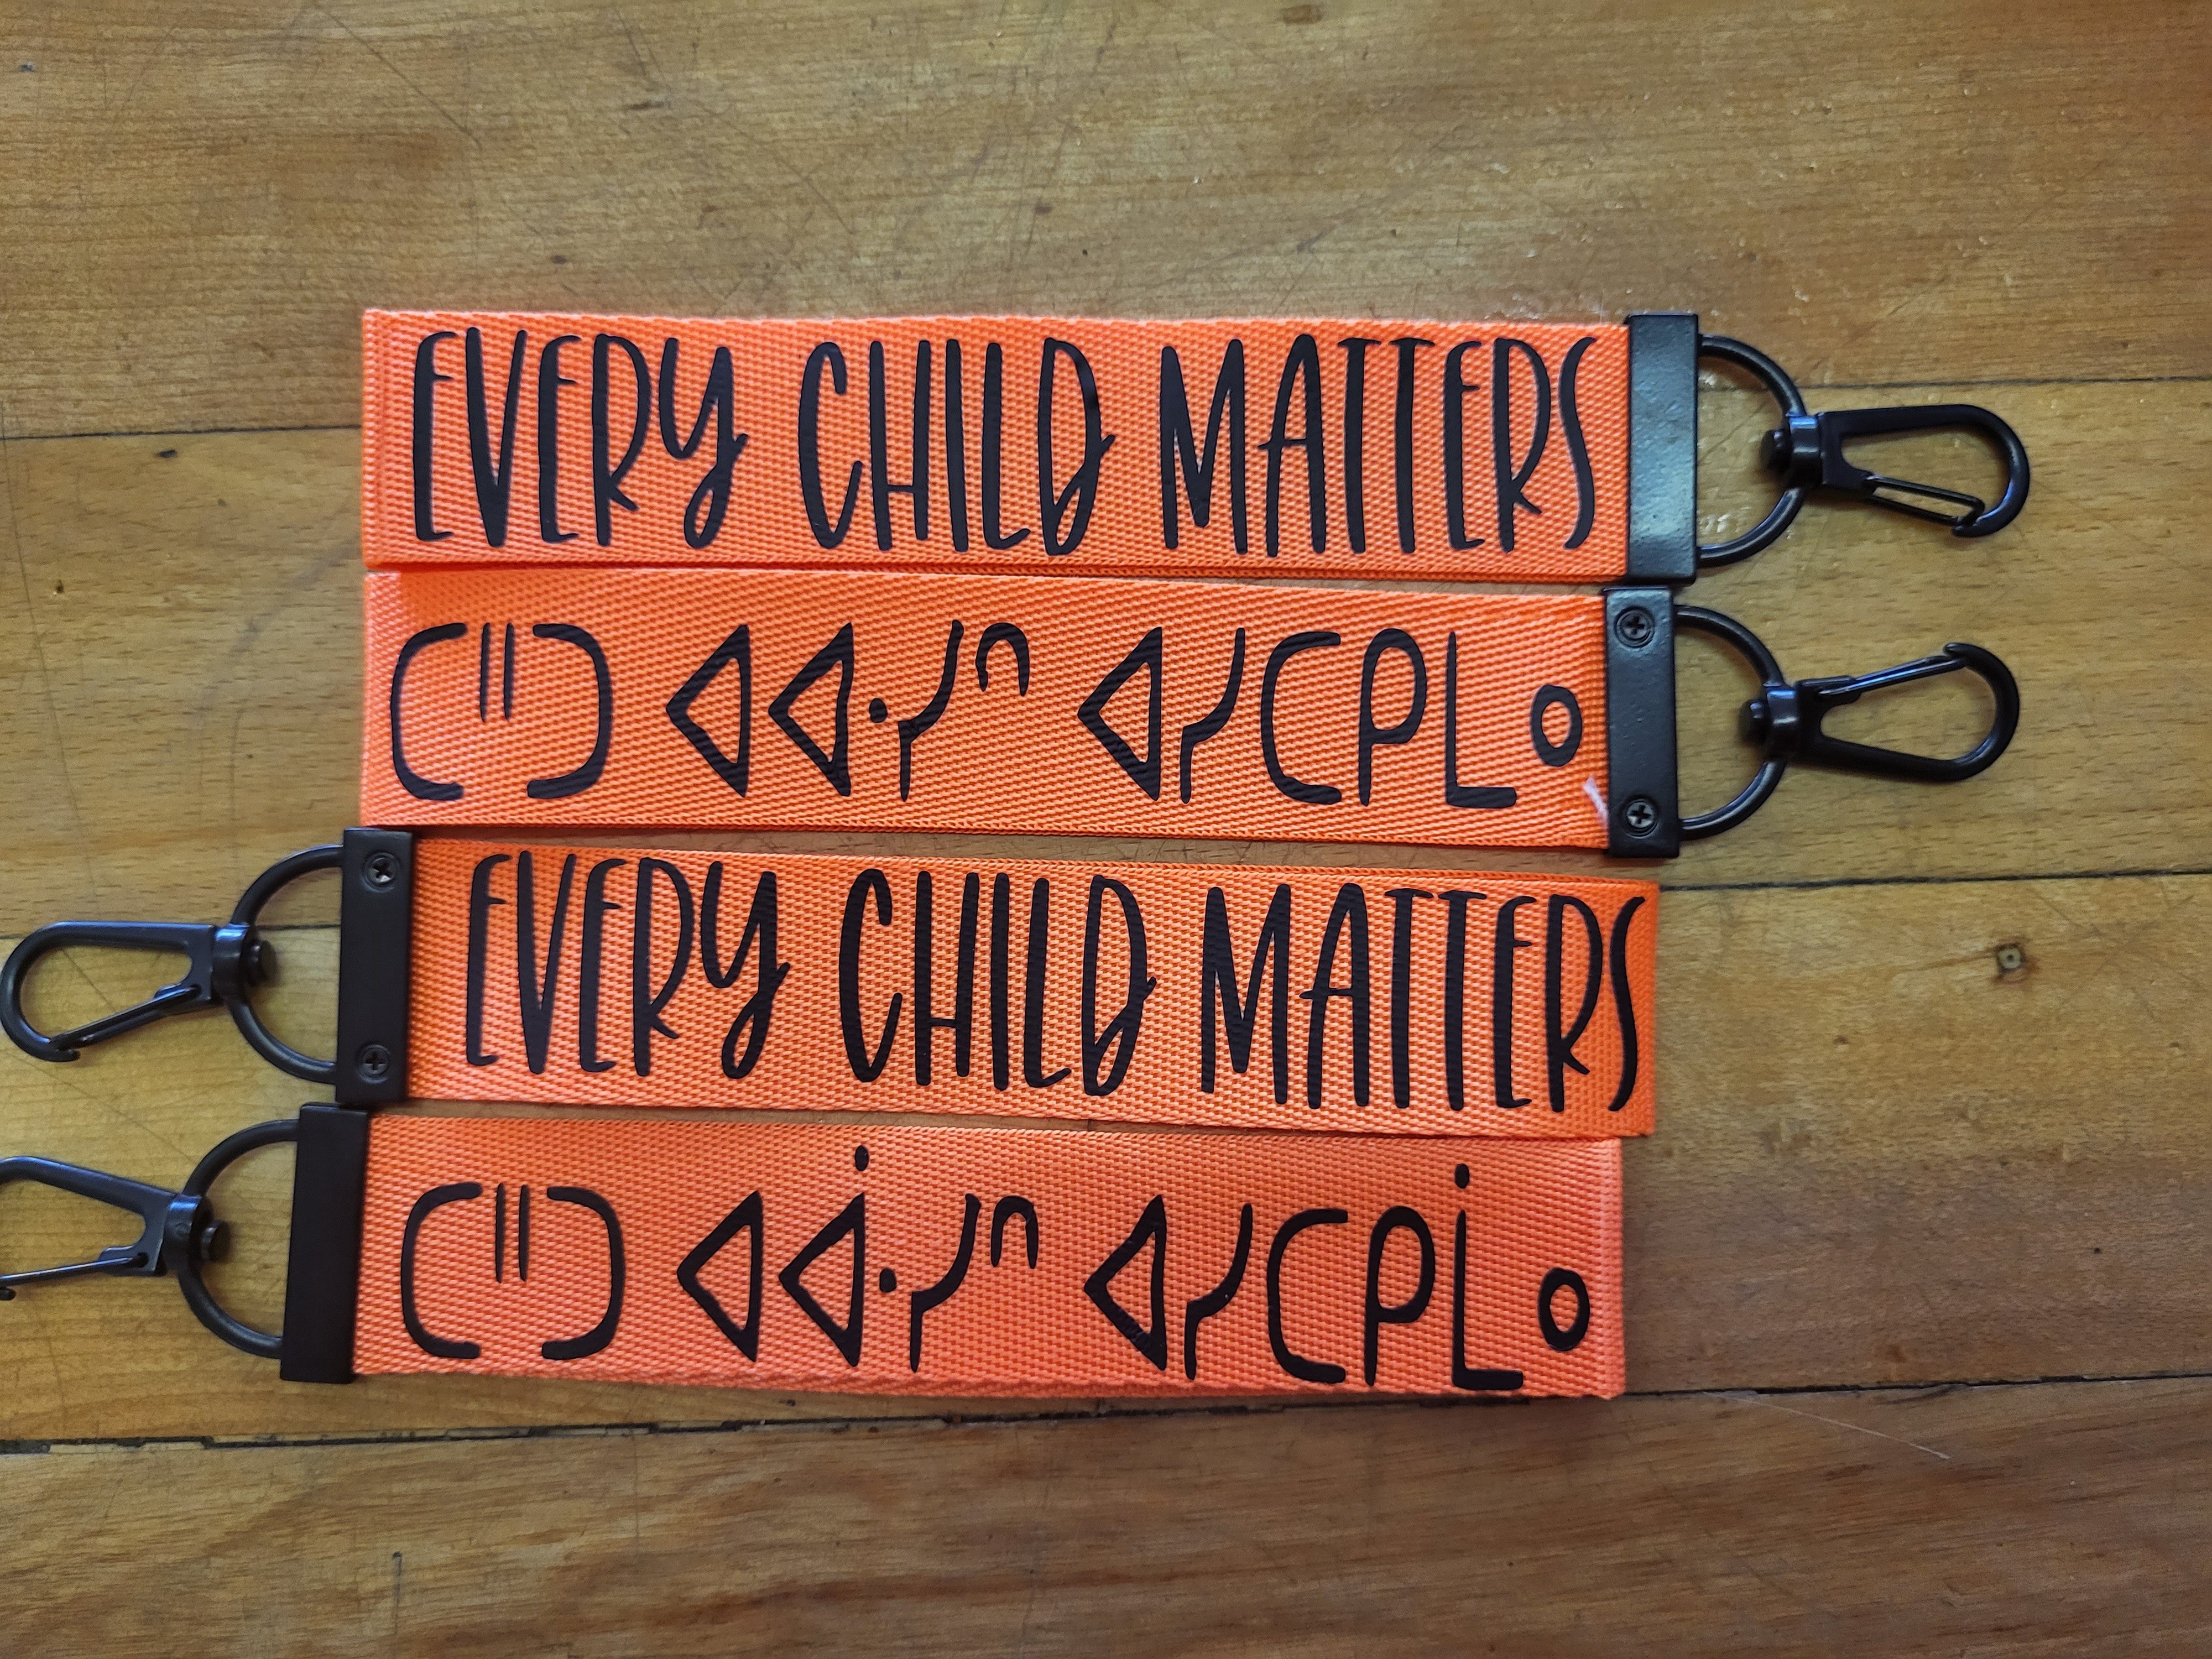 Every Child Matters | ECM | Cree | Keychain